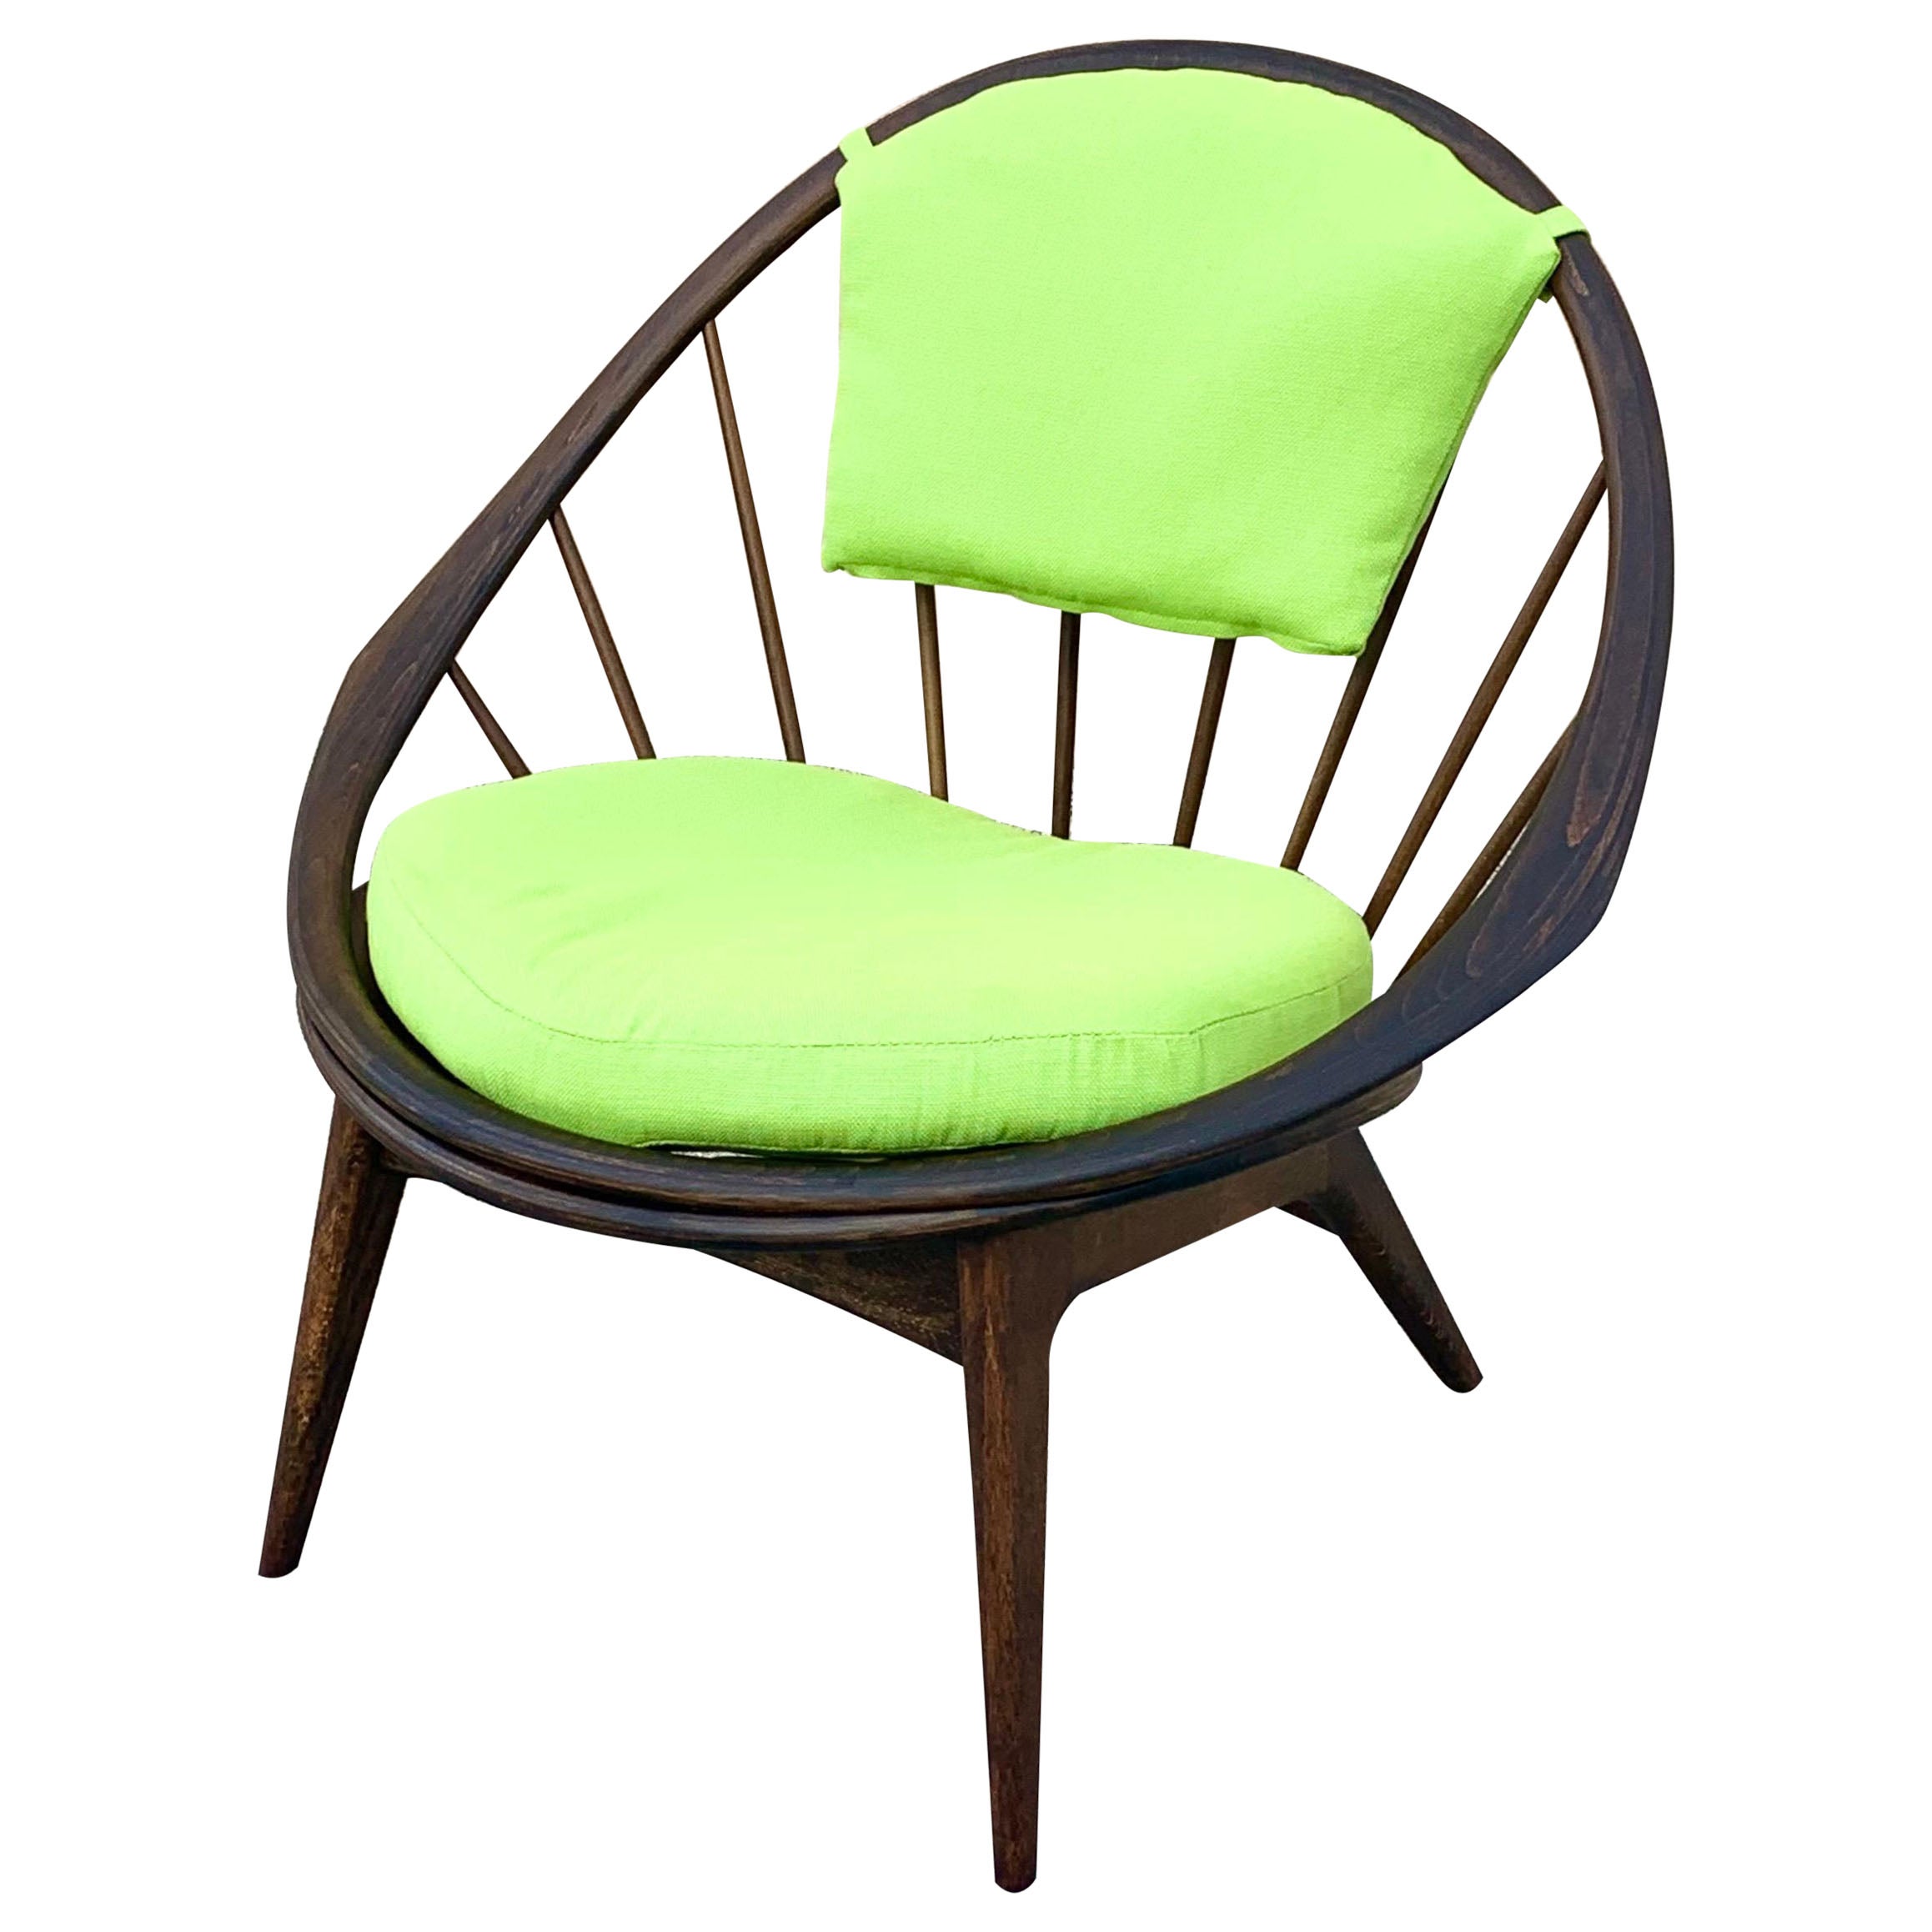 IB Kofod Larsen Walnut Hoop Chair, Green Upholstery For Sale